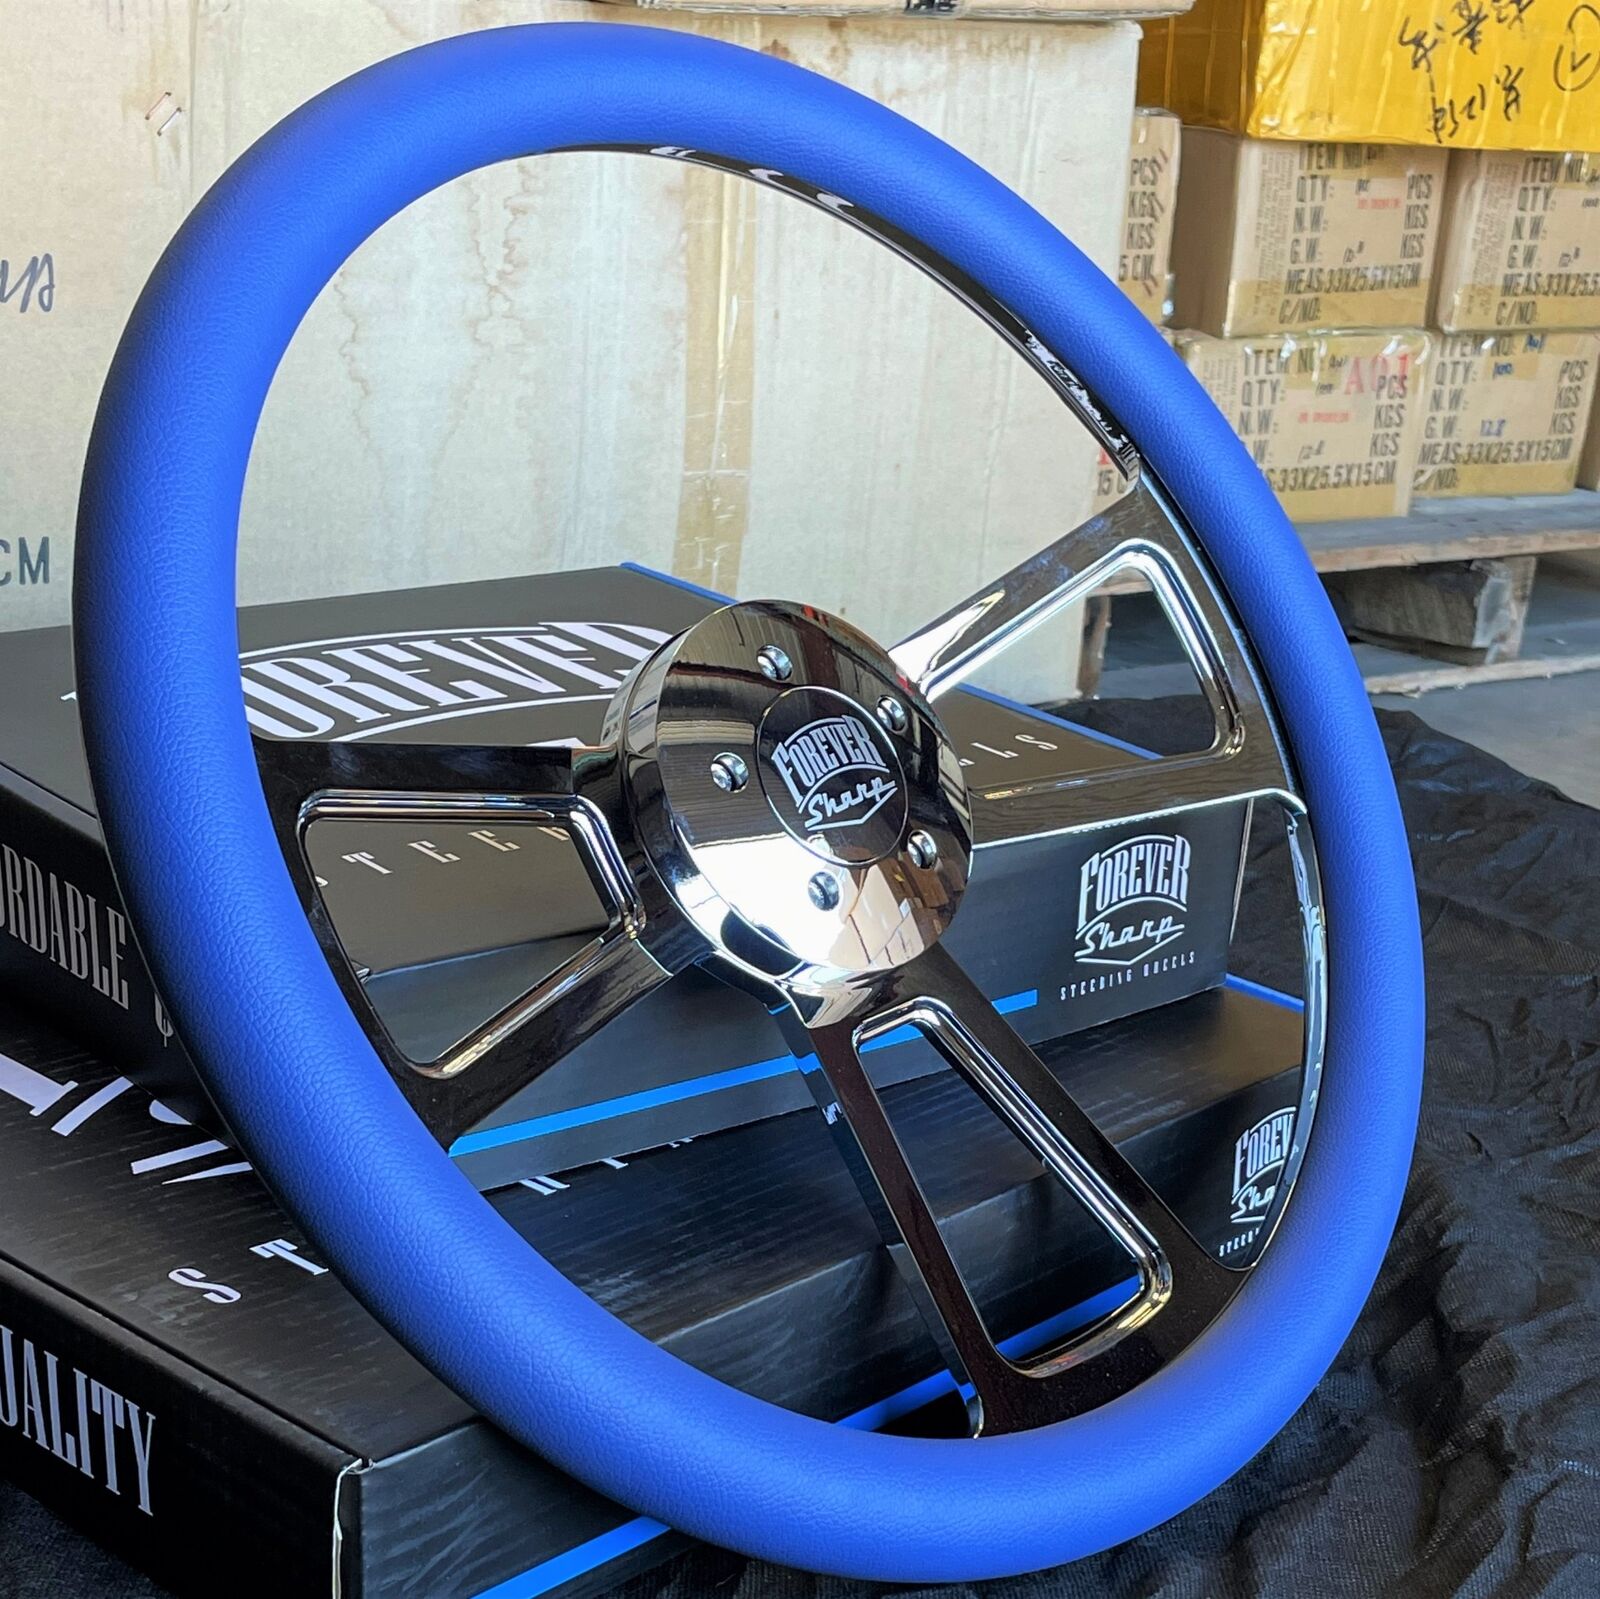 18 Inch Aluminum Semi Truck Steering Wheel with Sky Blue Vinyl Grip - 5 Hole